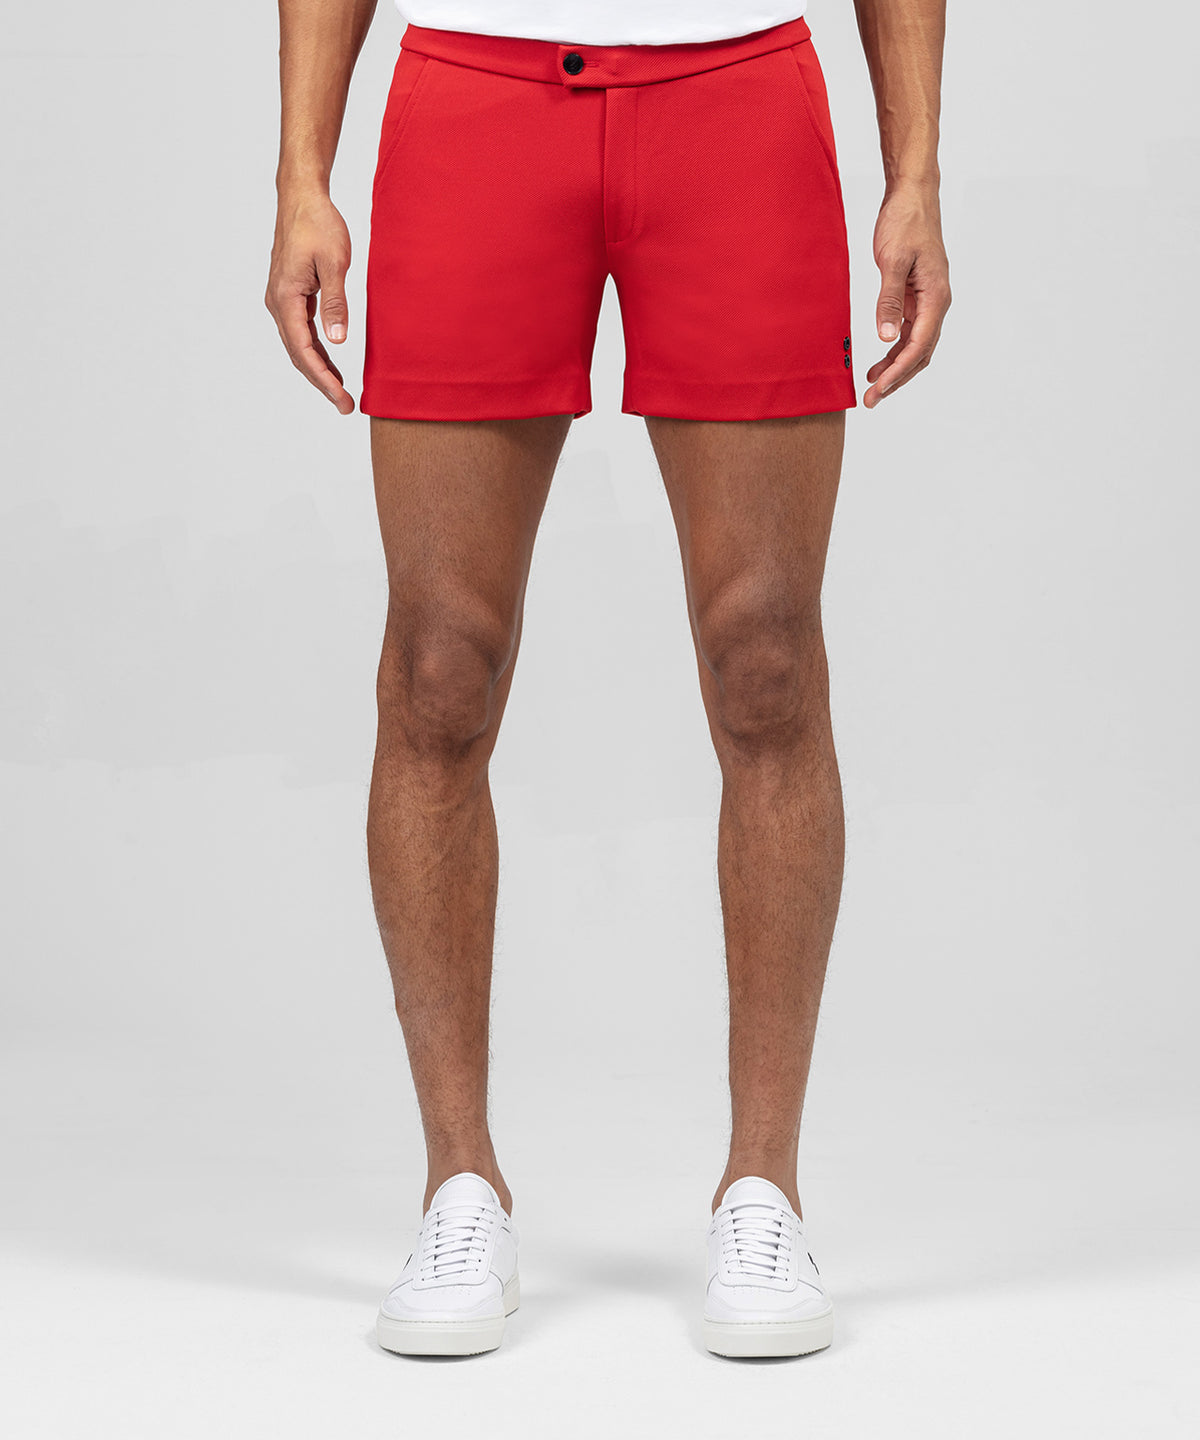 Tennis Shorts: Summer Red